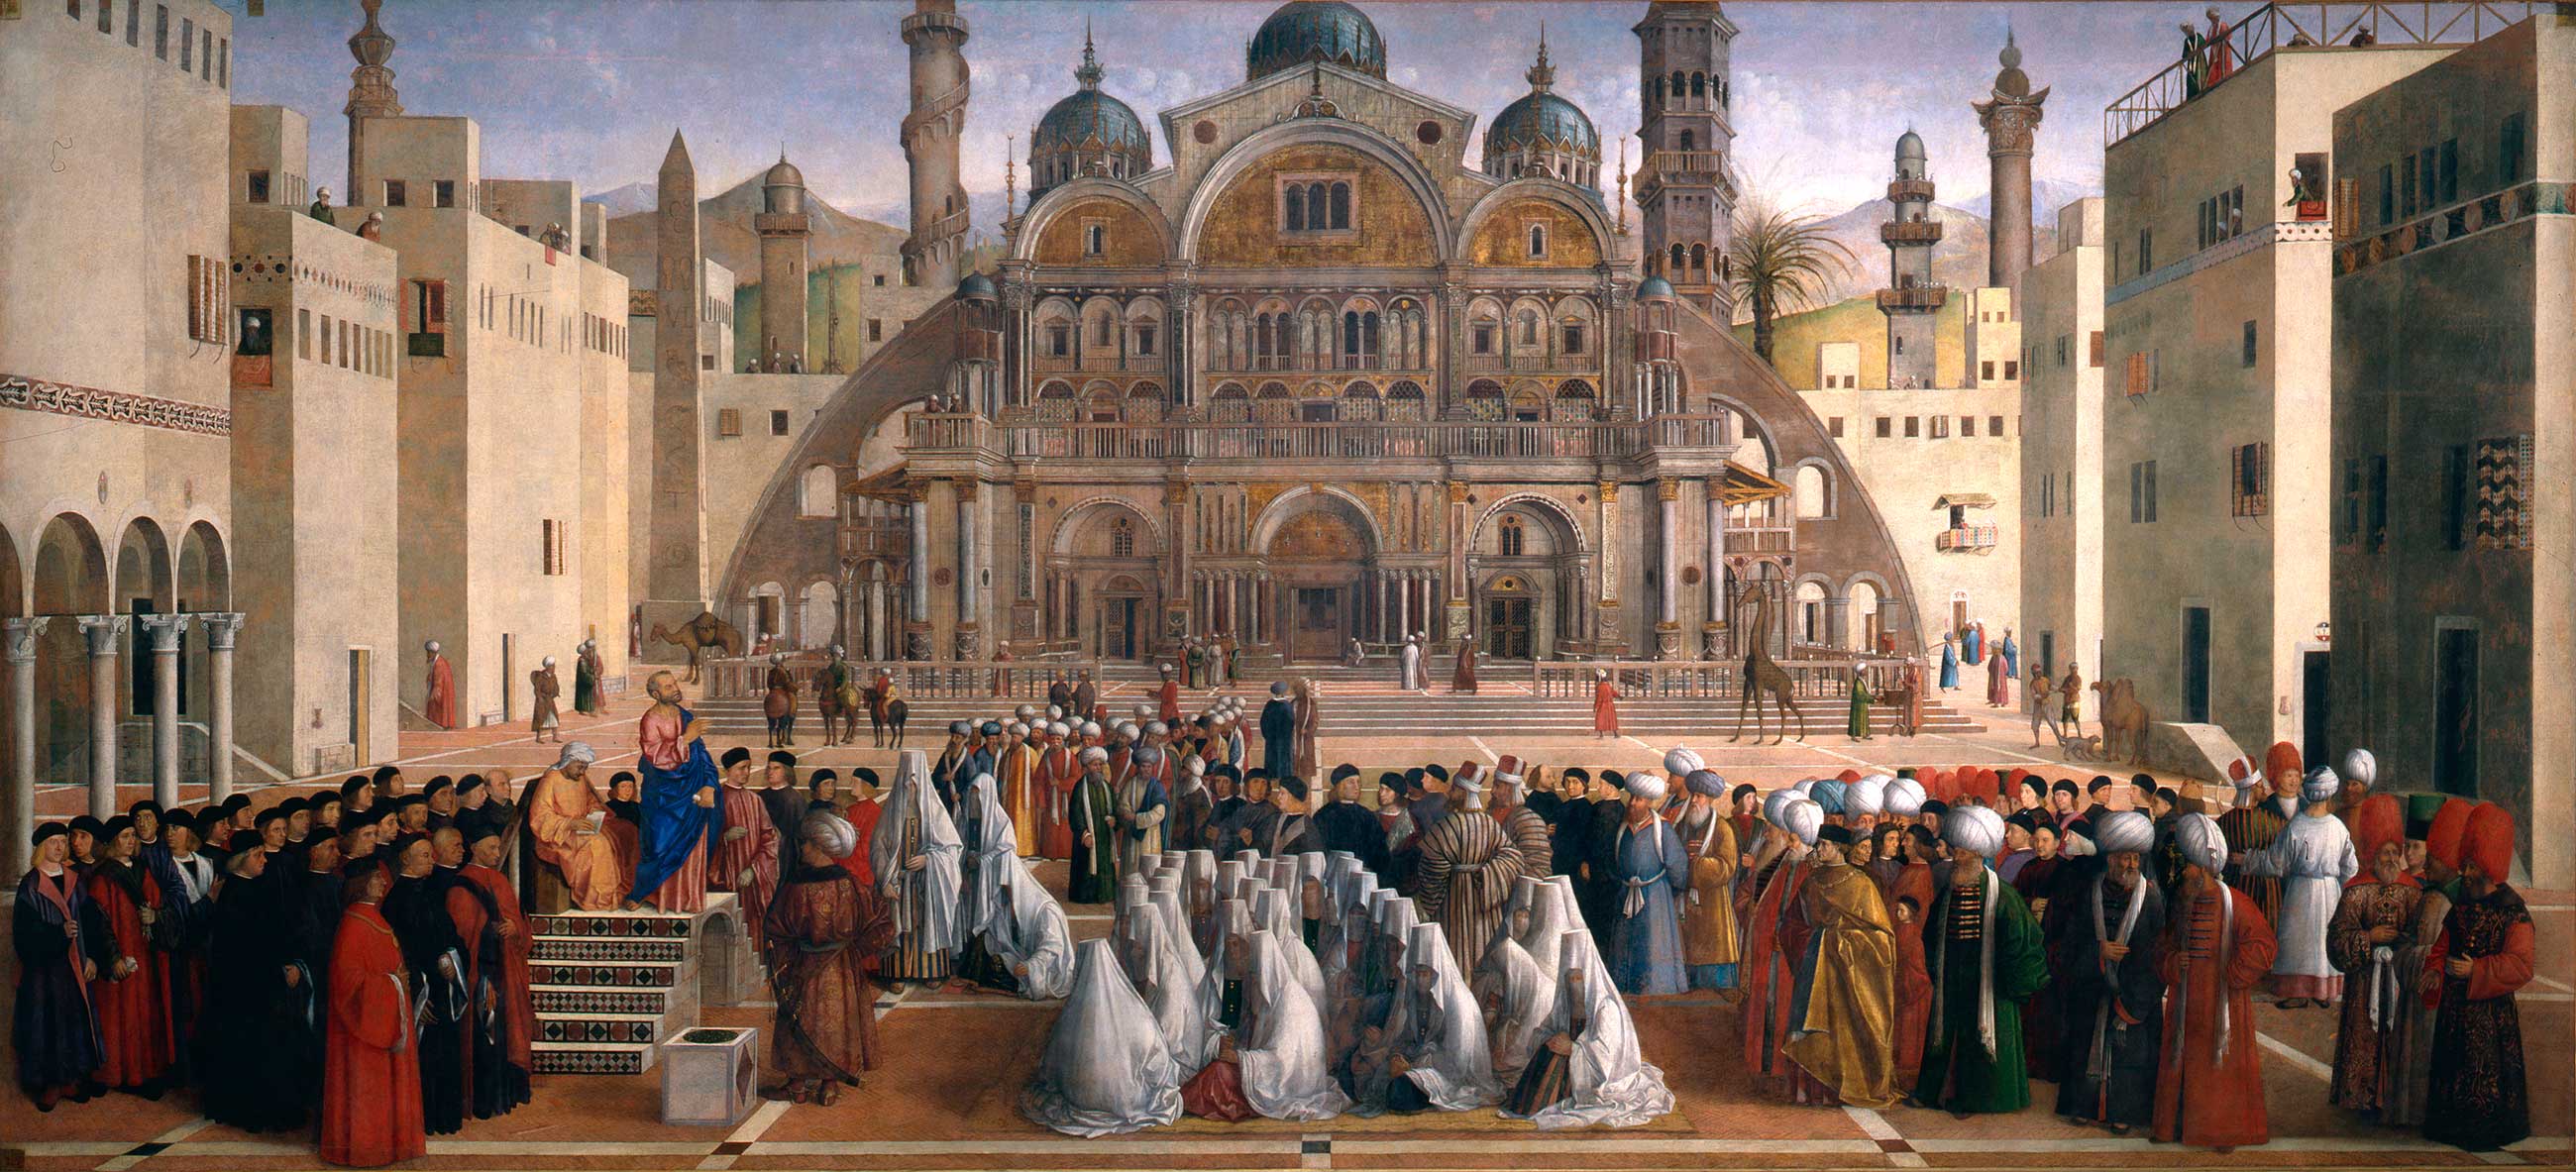 Marcus de evangelist predikt in Alexandrië by Gentile Bellini and Giovanni Bellini - 1504-07 - 347 × 770 cm 